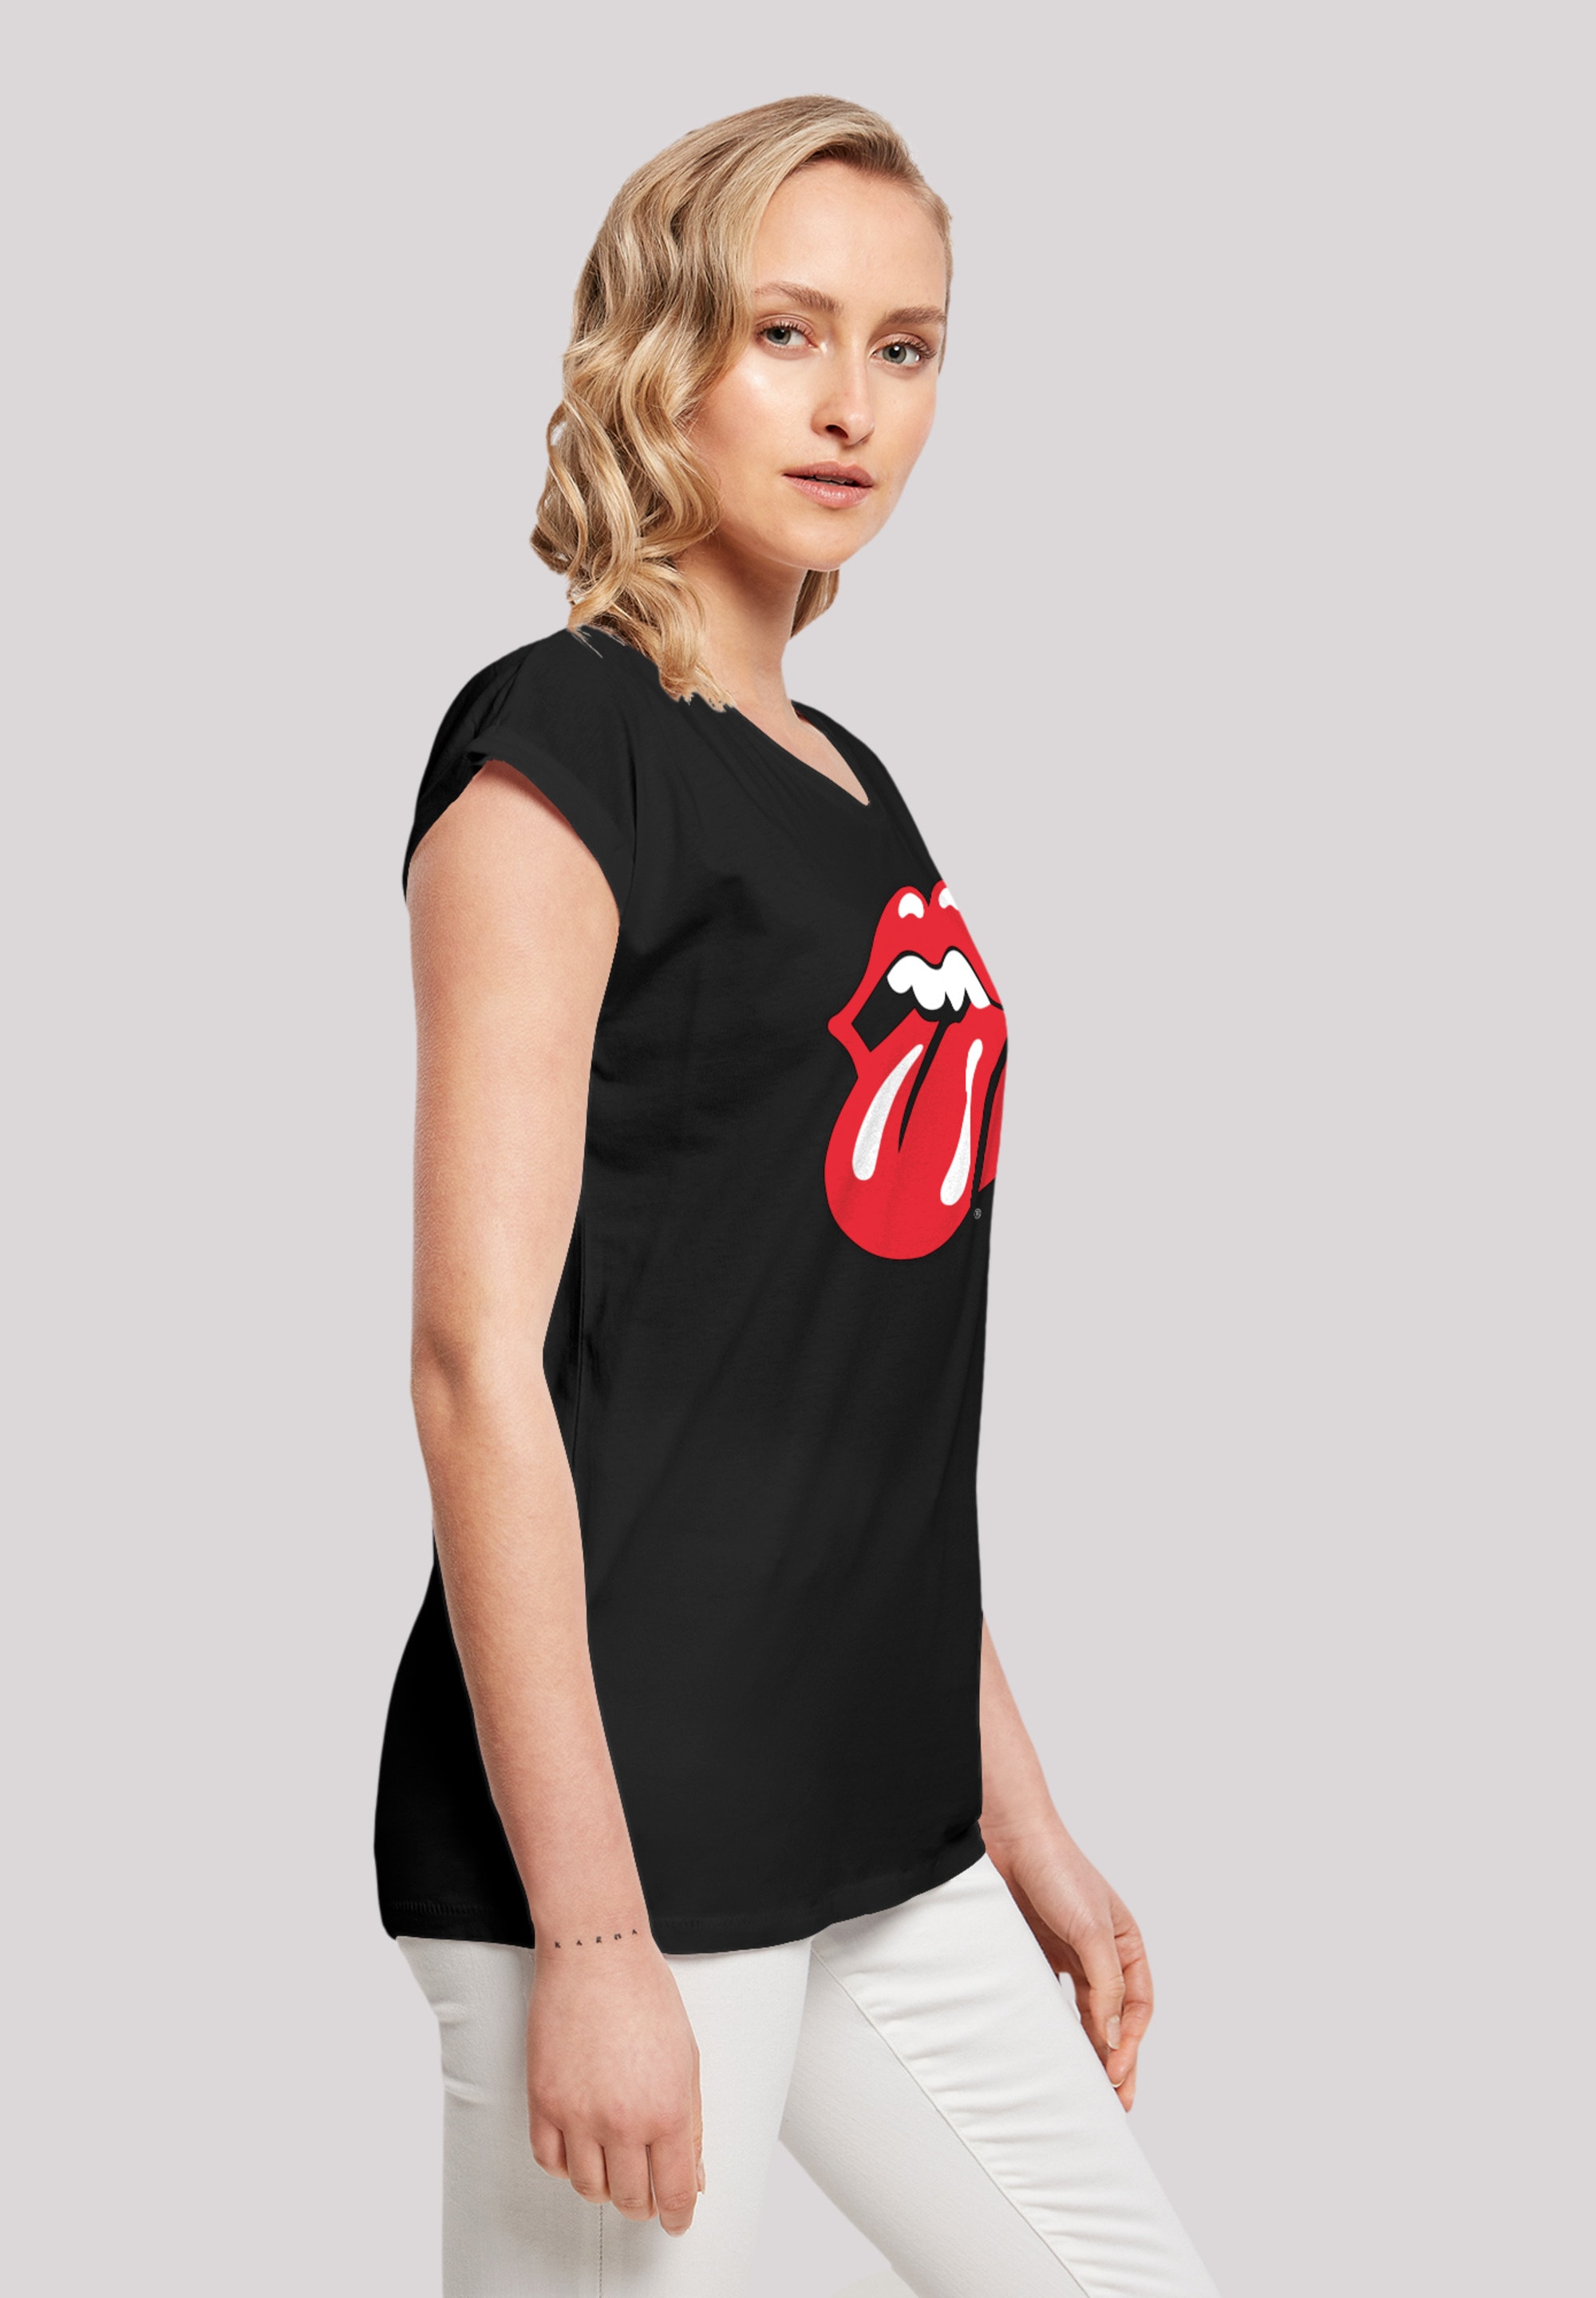 I\'m »The Print F4NT4STIC Rolling kaufen Stones | T-Shirt Rot«, walking Zunge